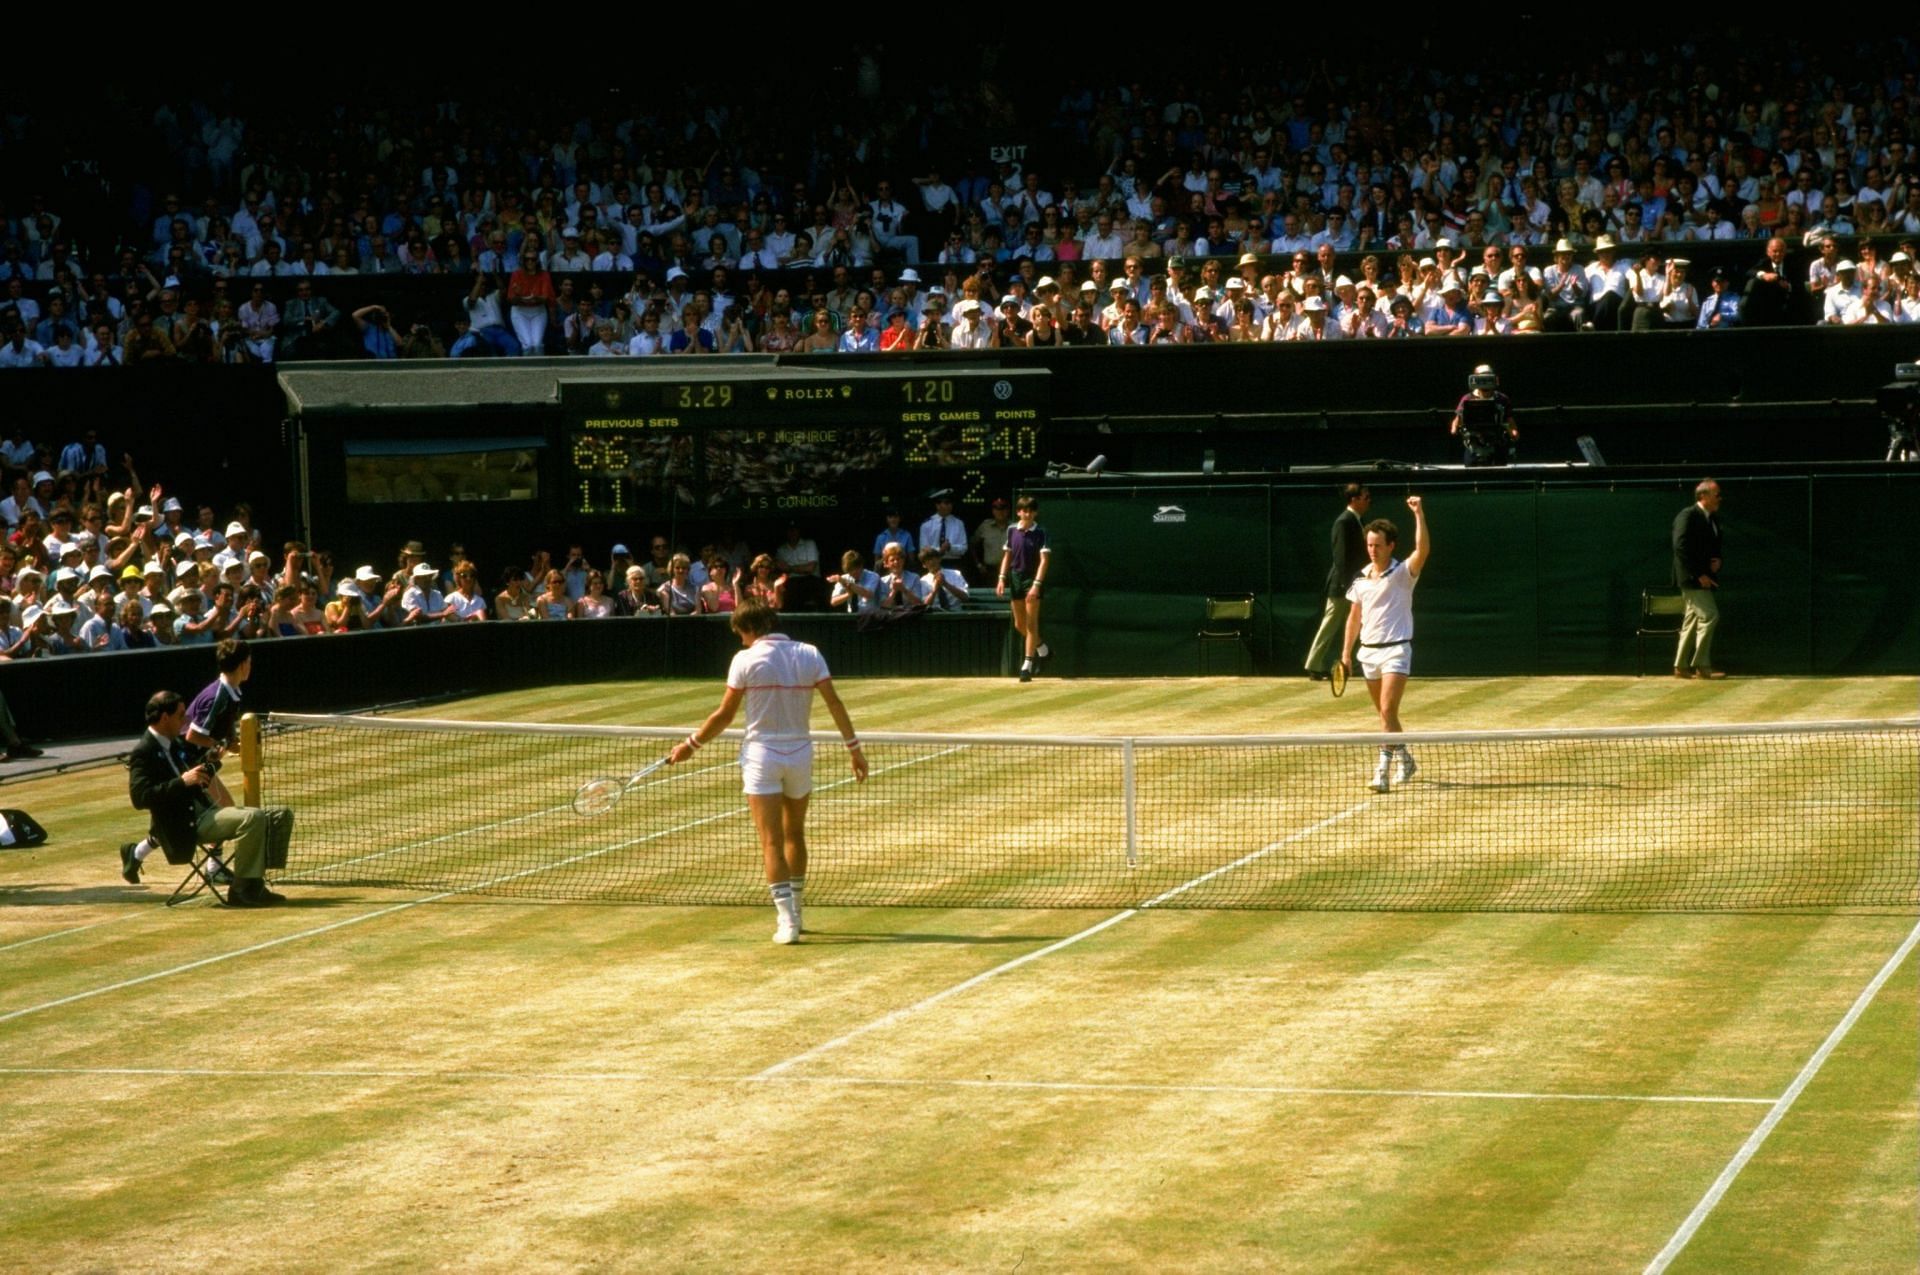 John McEnroe celebrates after winning the 1984 Wimbledon Final verus Jimmy Connors